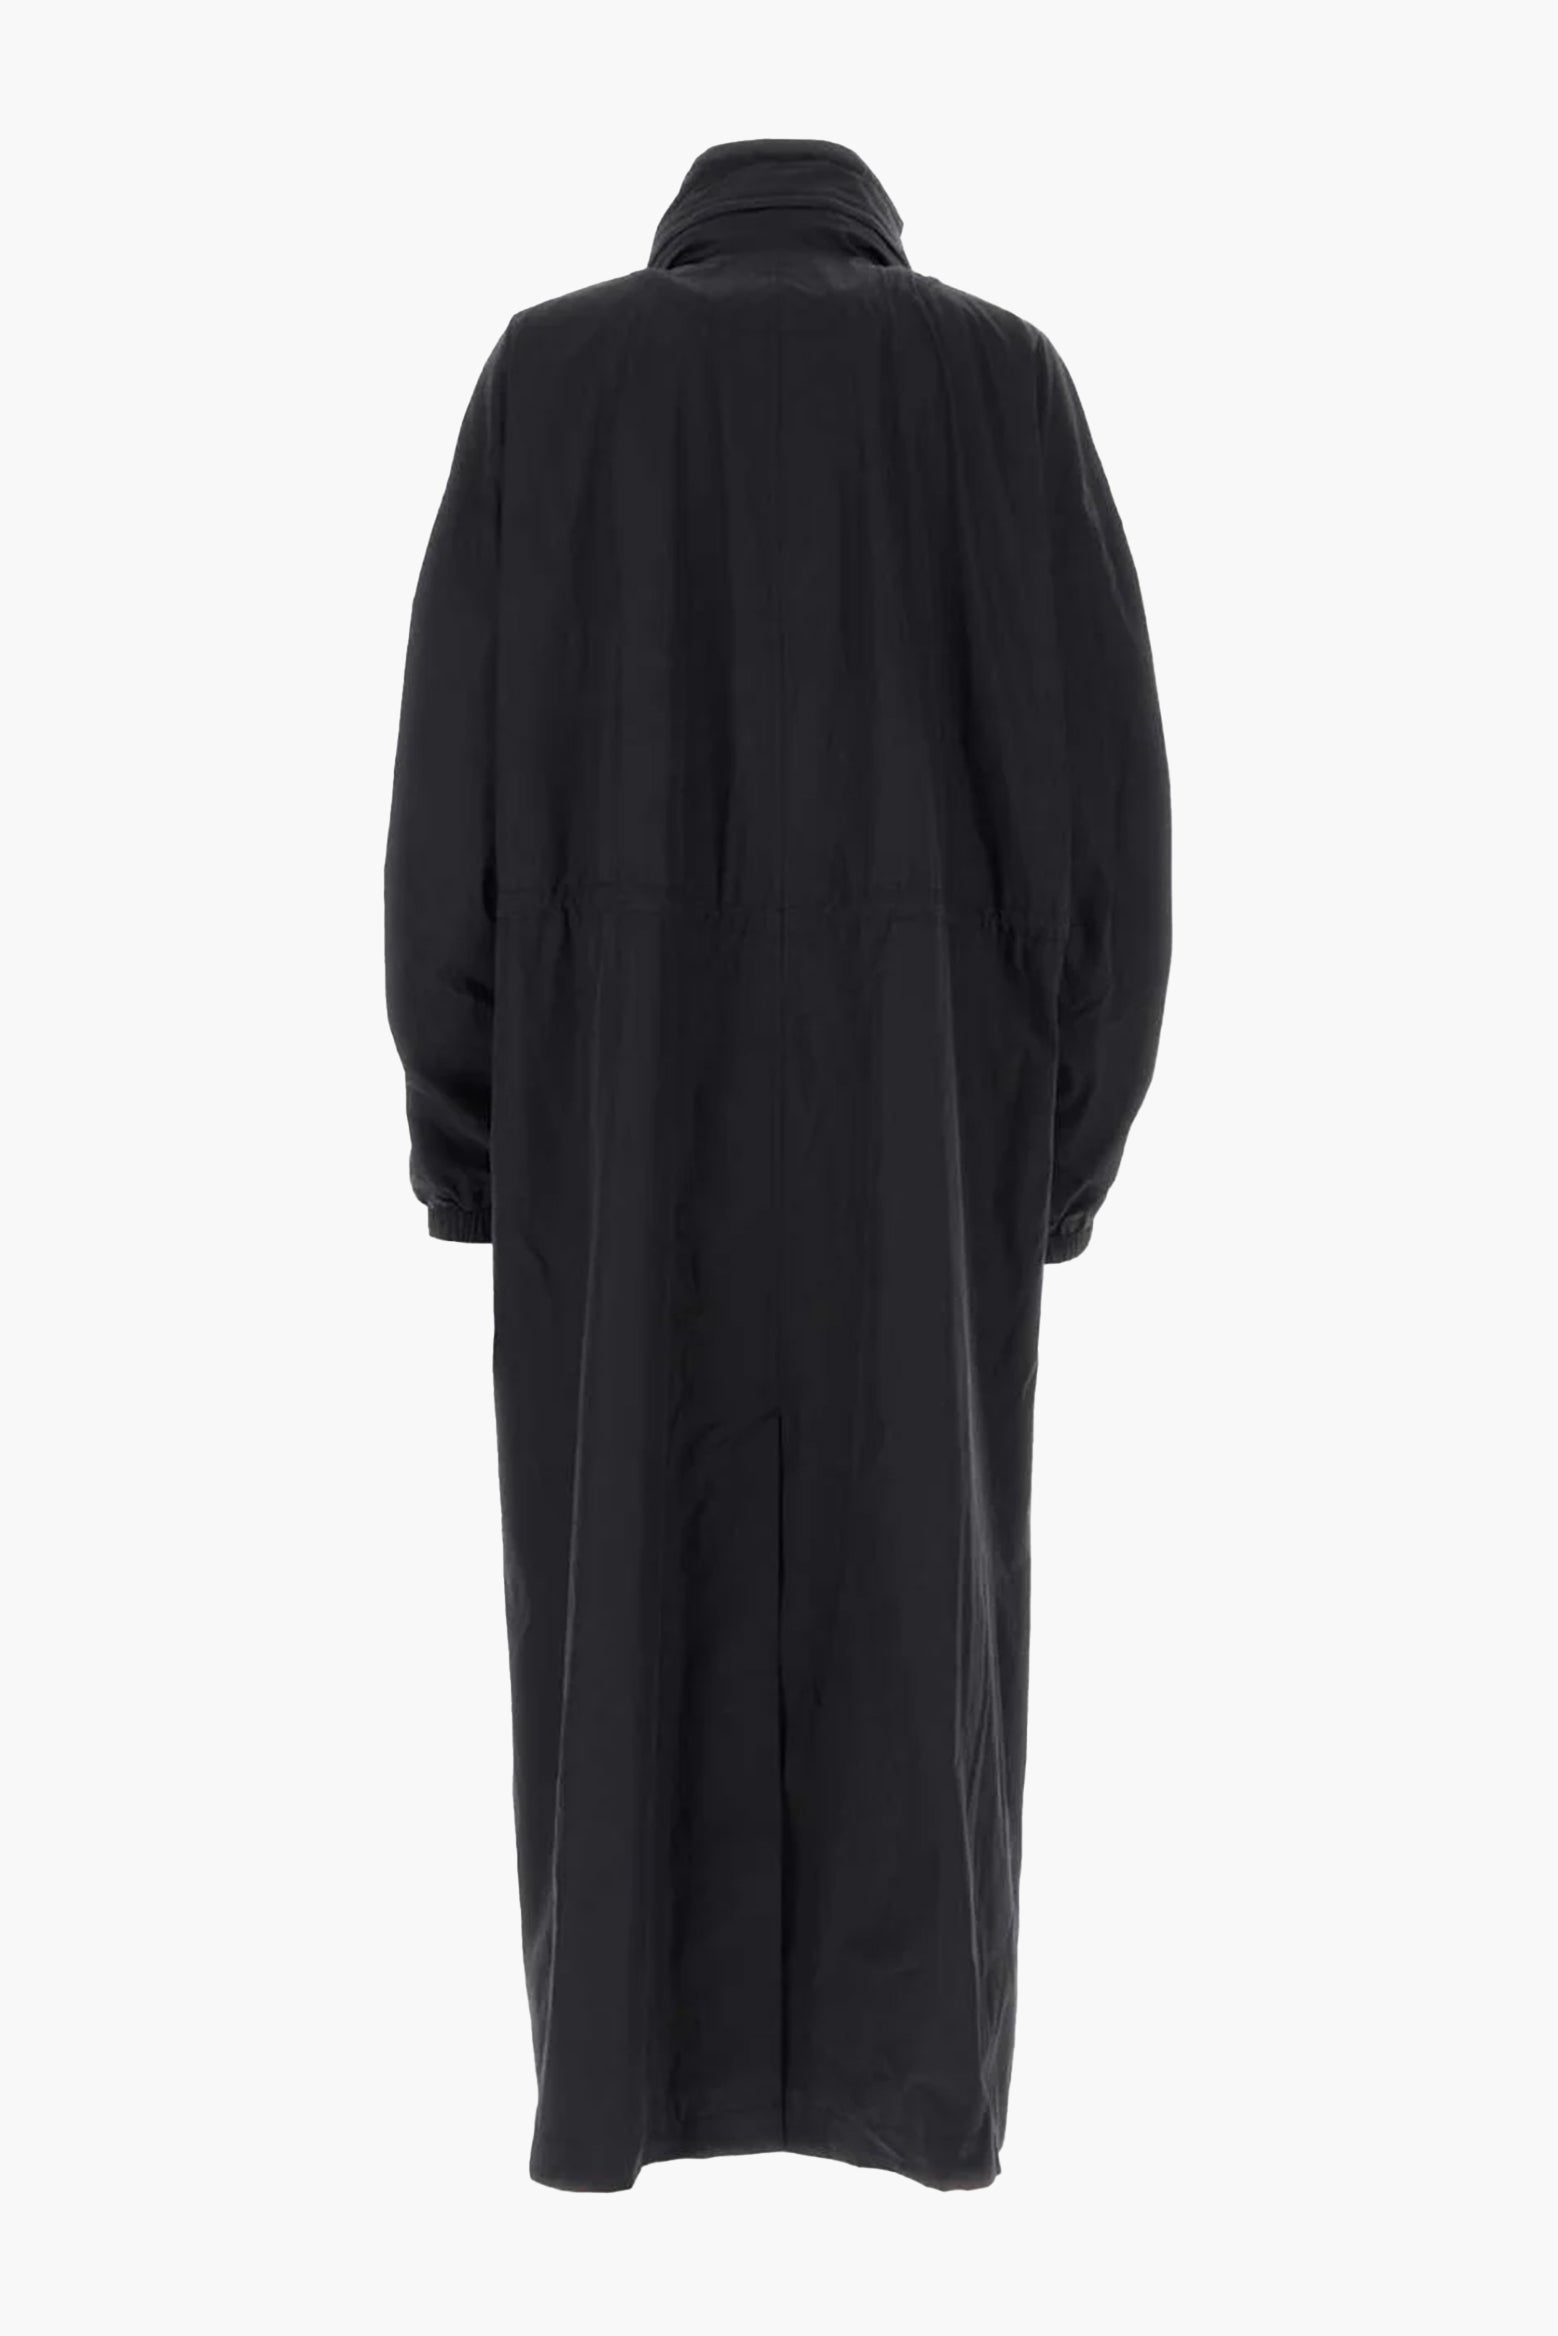 ISABEL MARANT Berthely Coat in Faded Black | The New Trend Australia